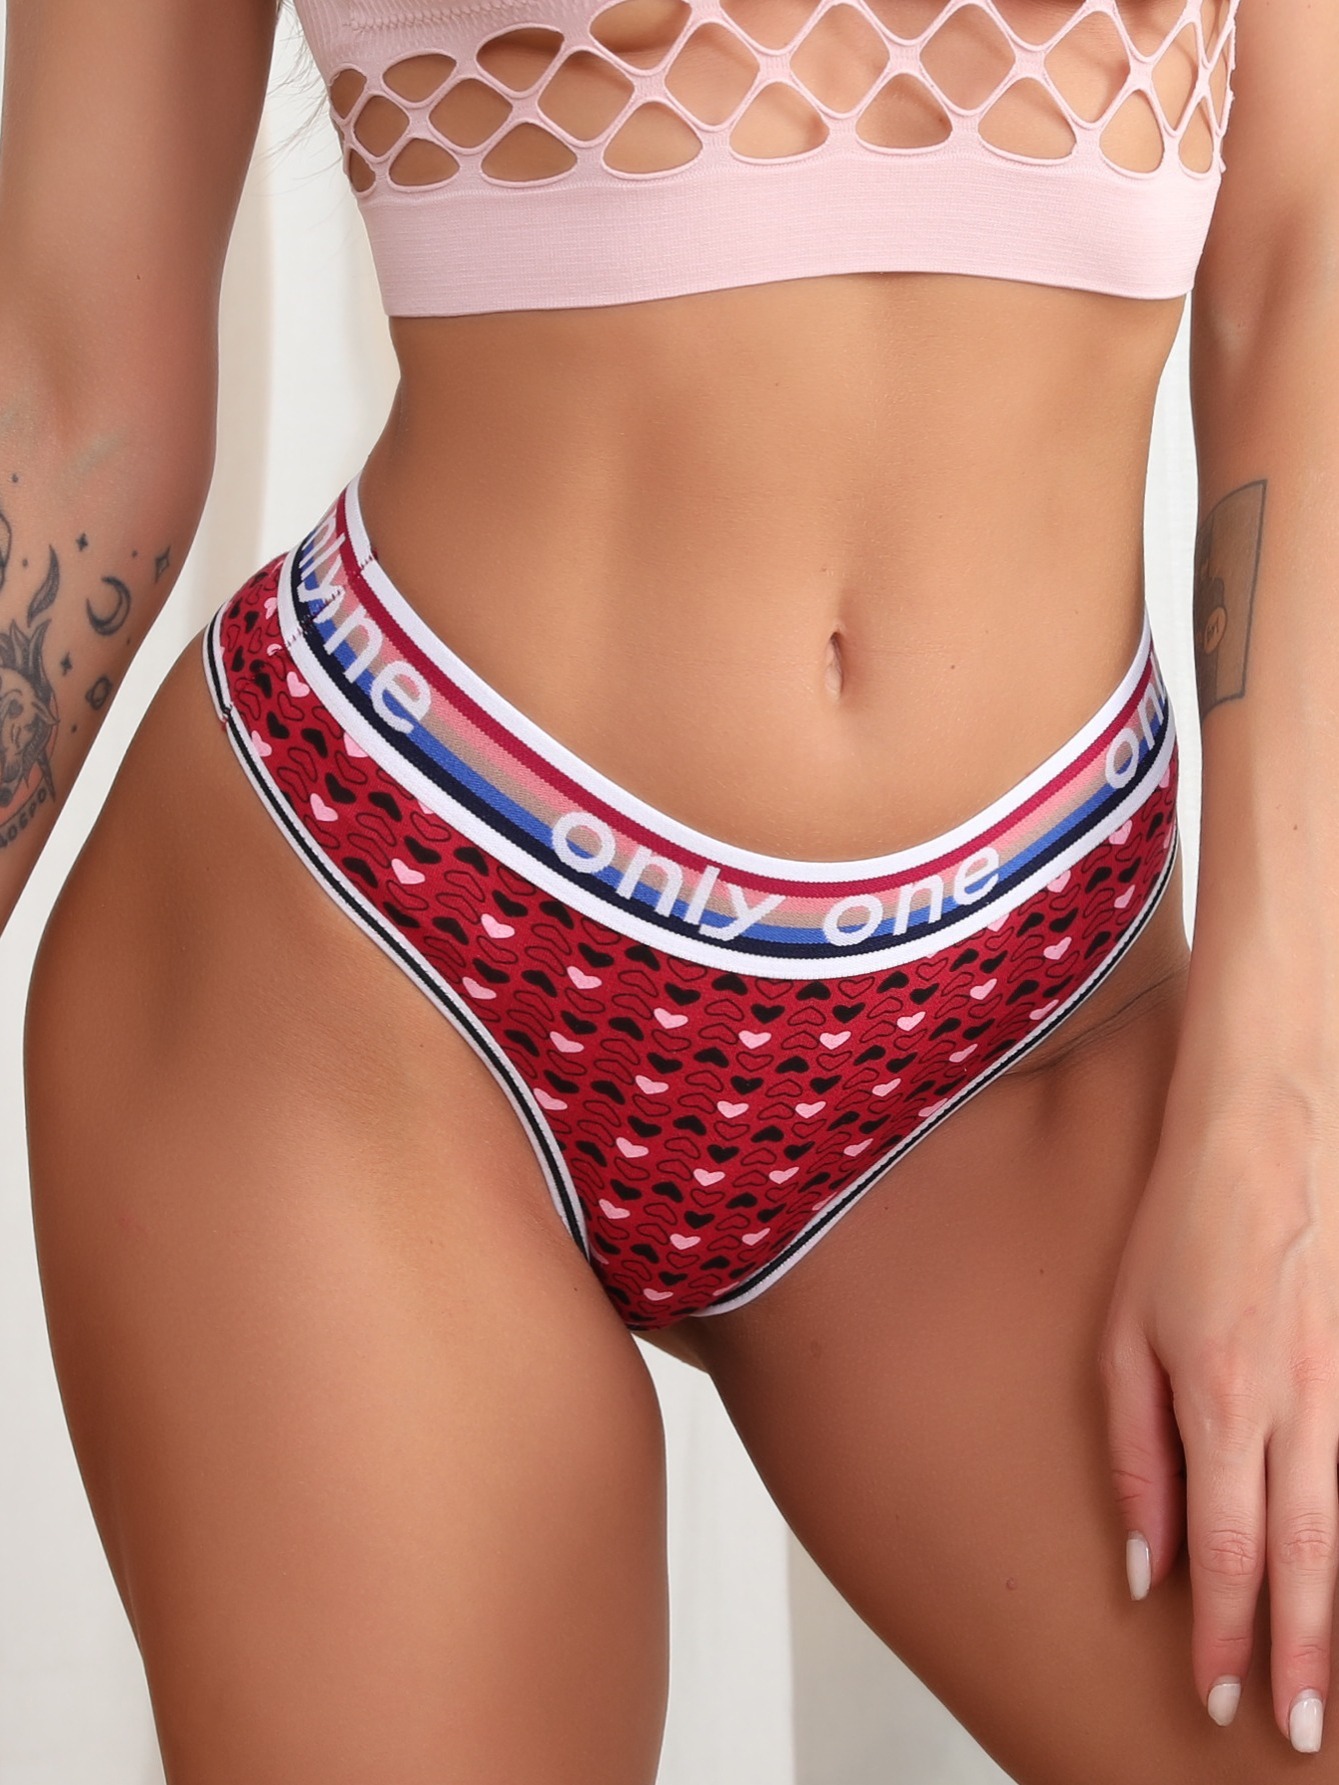 Best Deal for Hot Girls Sexy Panty Underwear Bikini String Seamless